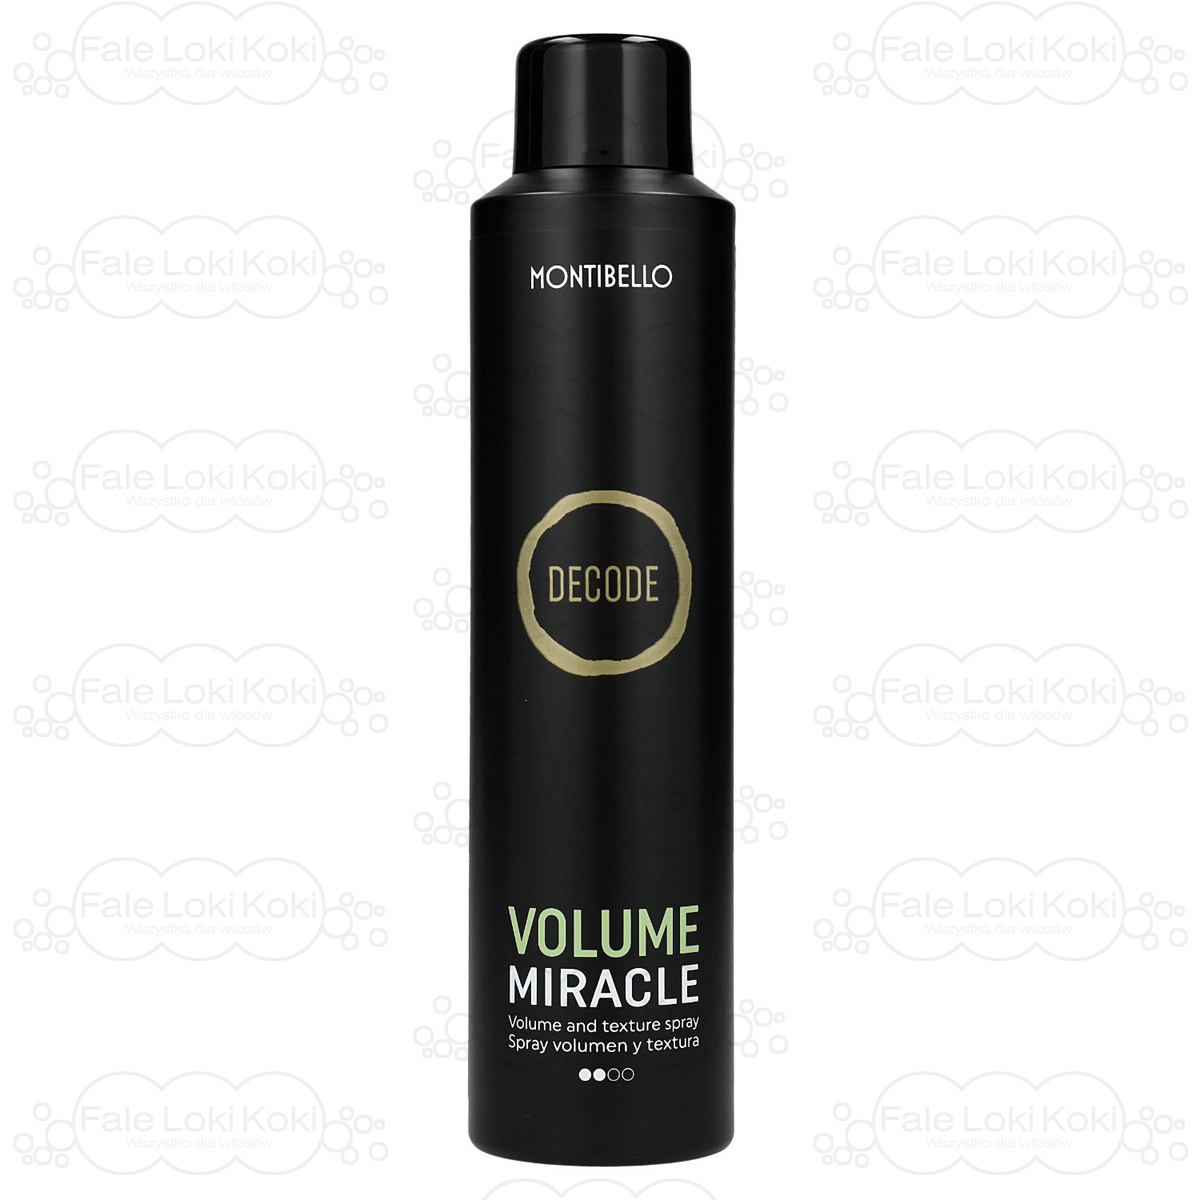 MONTIBELLO DECODE spray nadający objętość Volume Miracle 250 ml